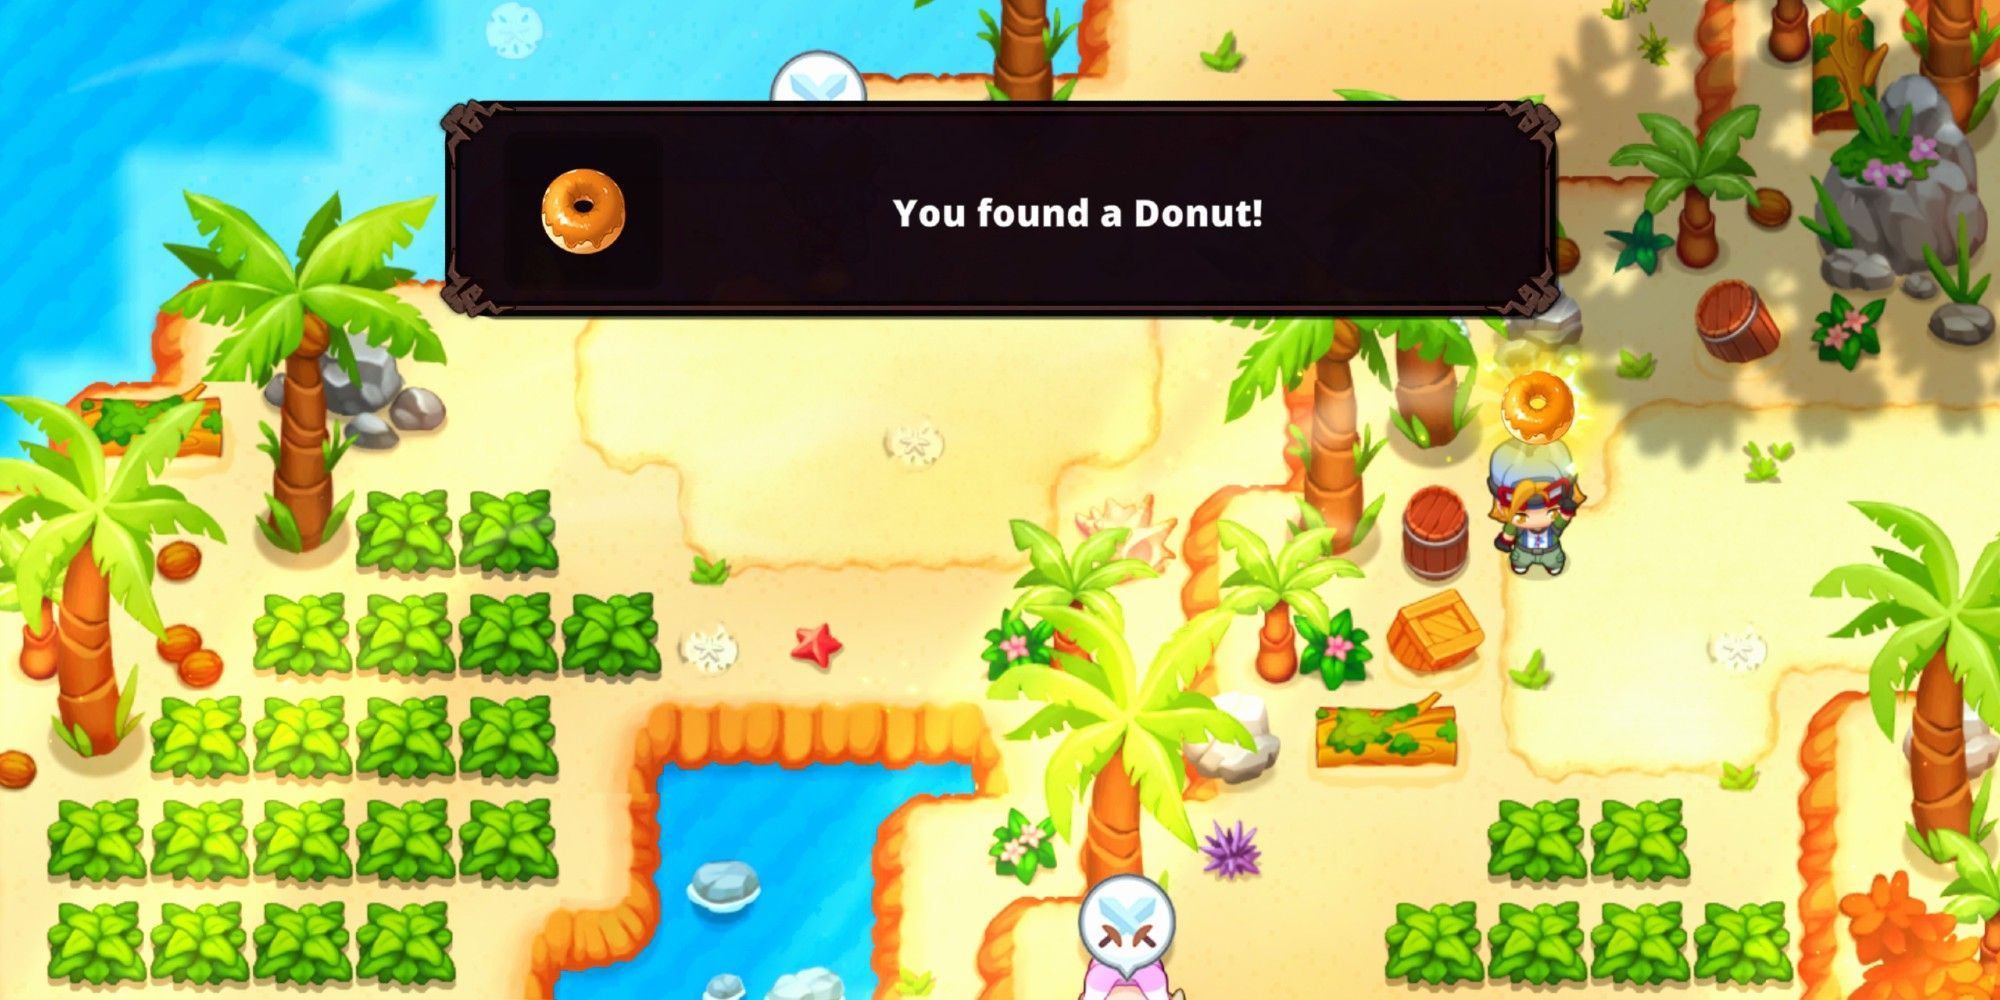 Nexomon: Extinction Donut found on the overworld screen